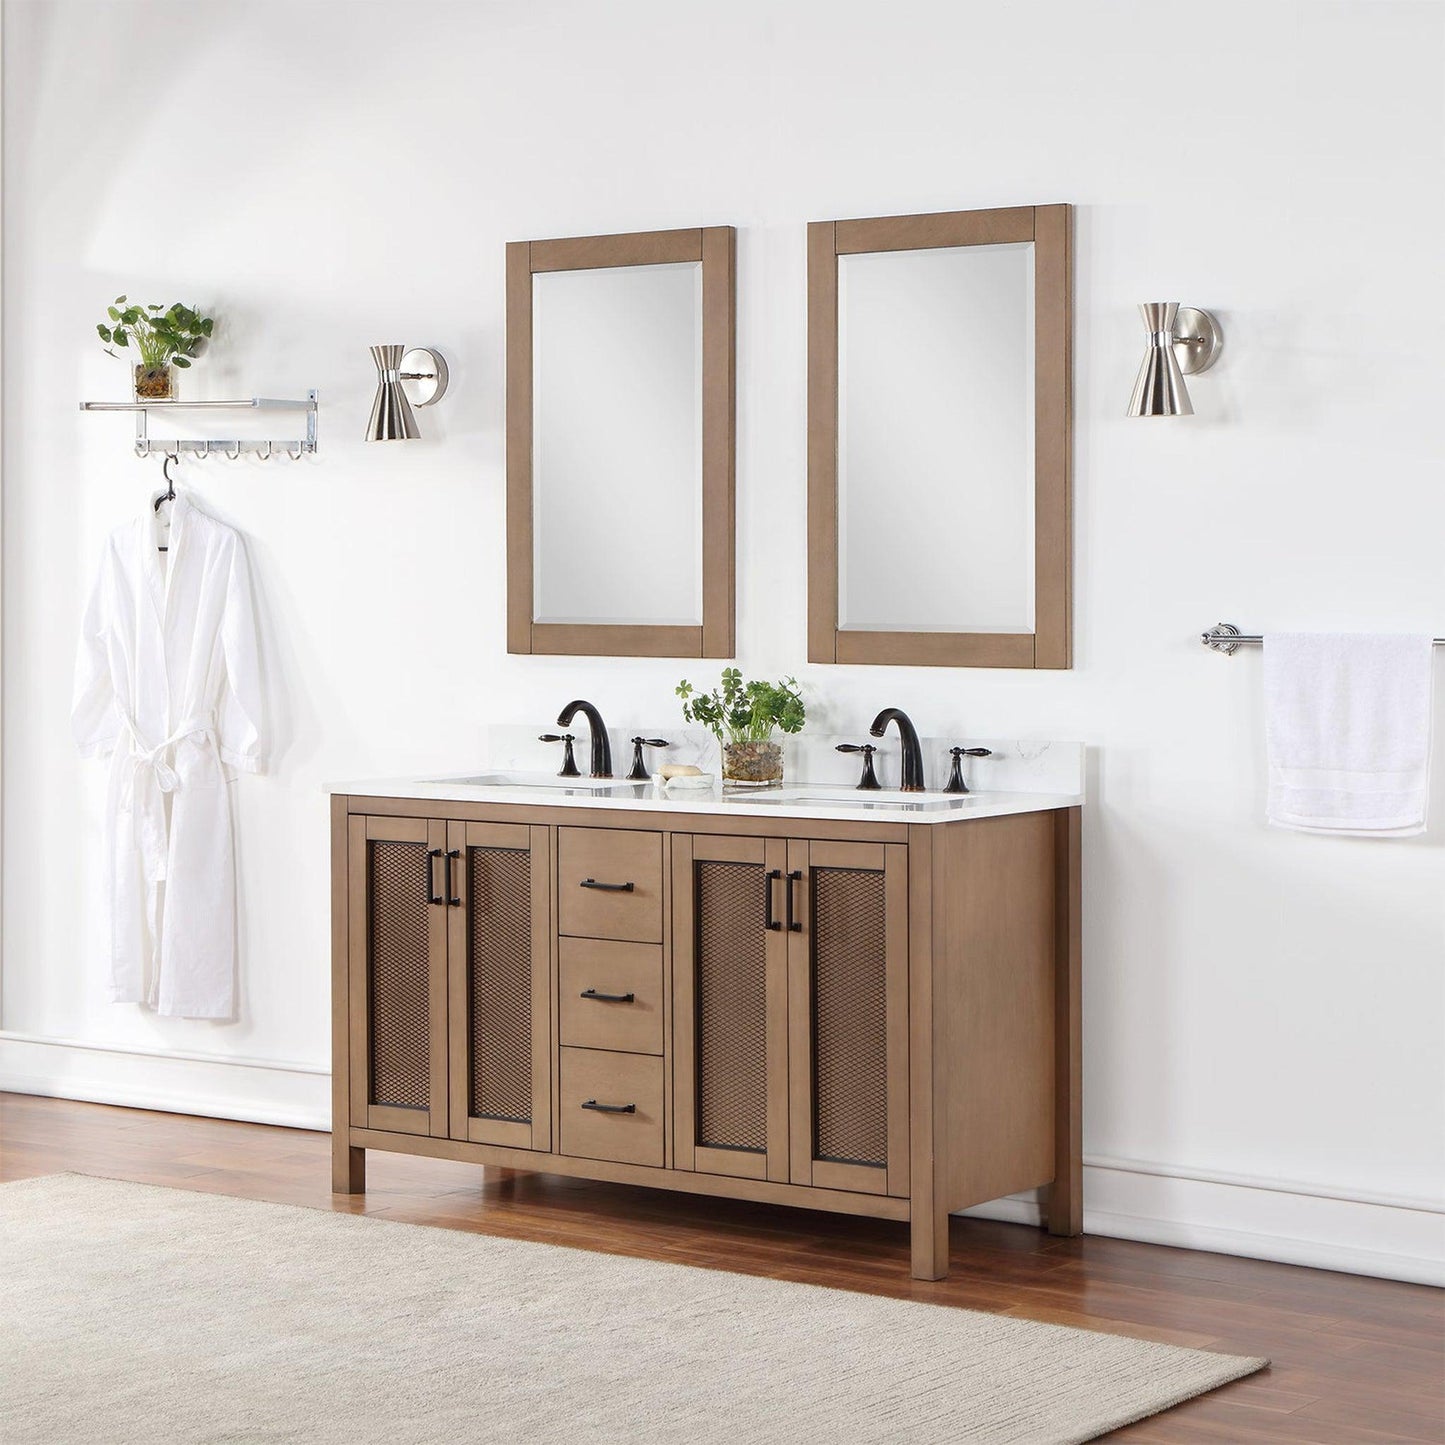 Altair Hadiya 60" Double Brown Pine Freestanding Bathroom Vanity Set With Mirror, Elegant Aosta White Composite Stone Top, Two Rectangular Undermount Ceramic Sinks, Overflow, and Backsplash